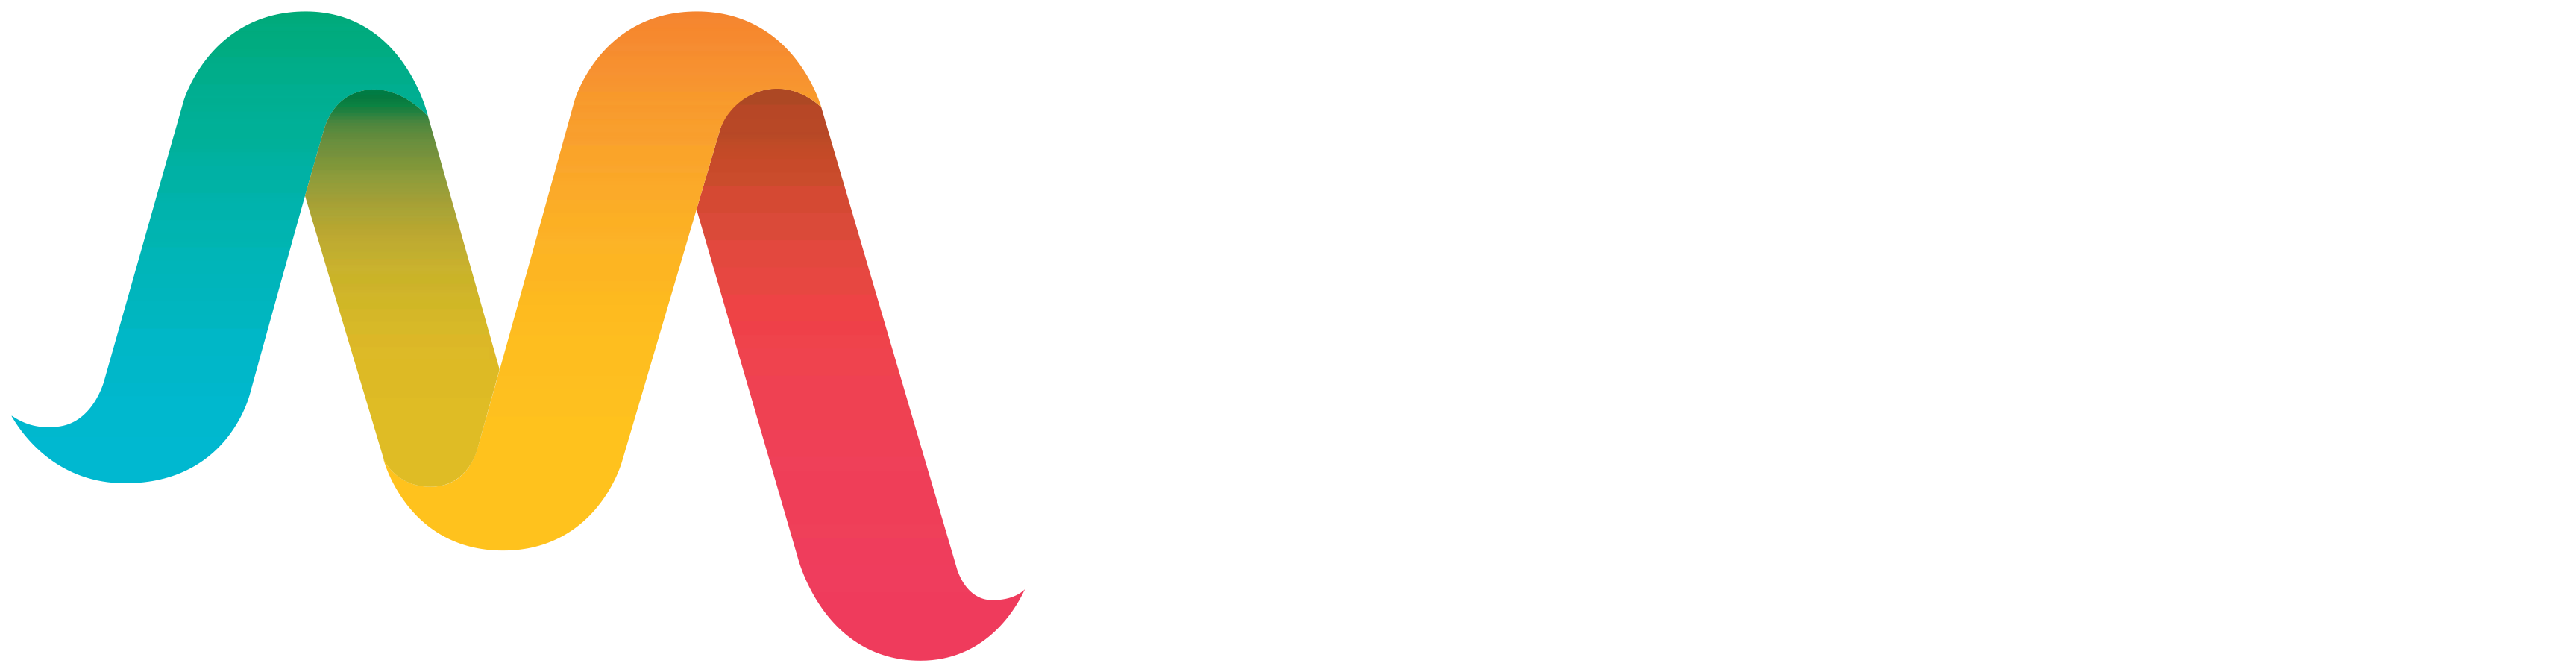 Logo-Megavale-horizontal-colorido texto branco